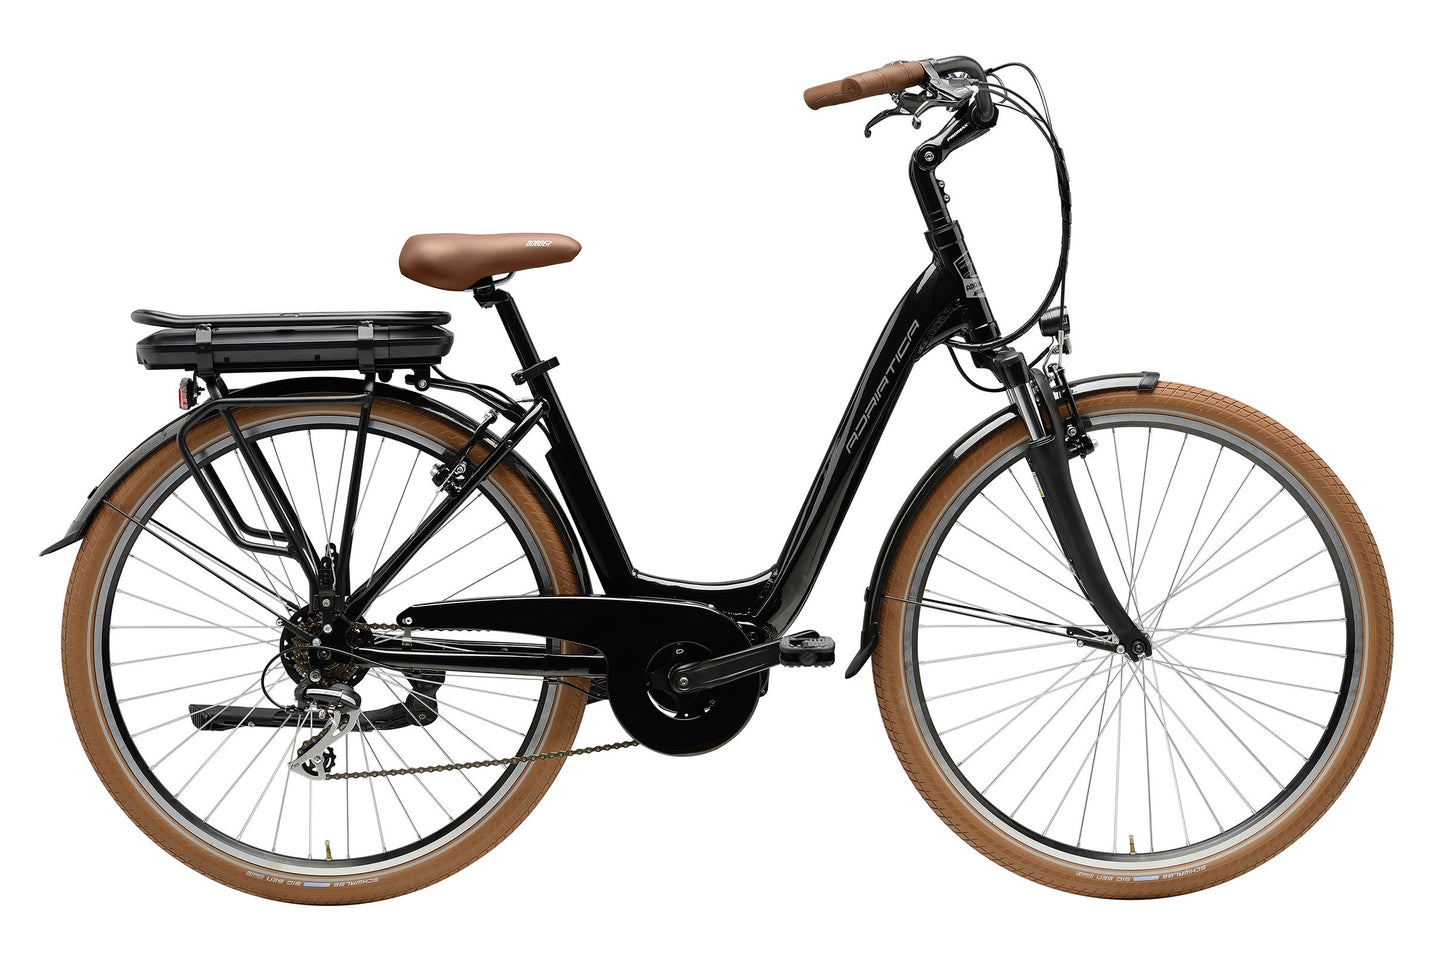 Bicicleta Elétrica Adriatica New Age